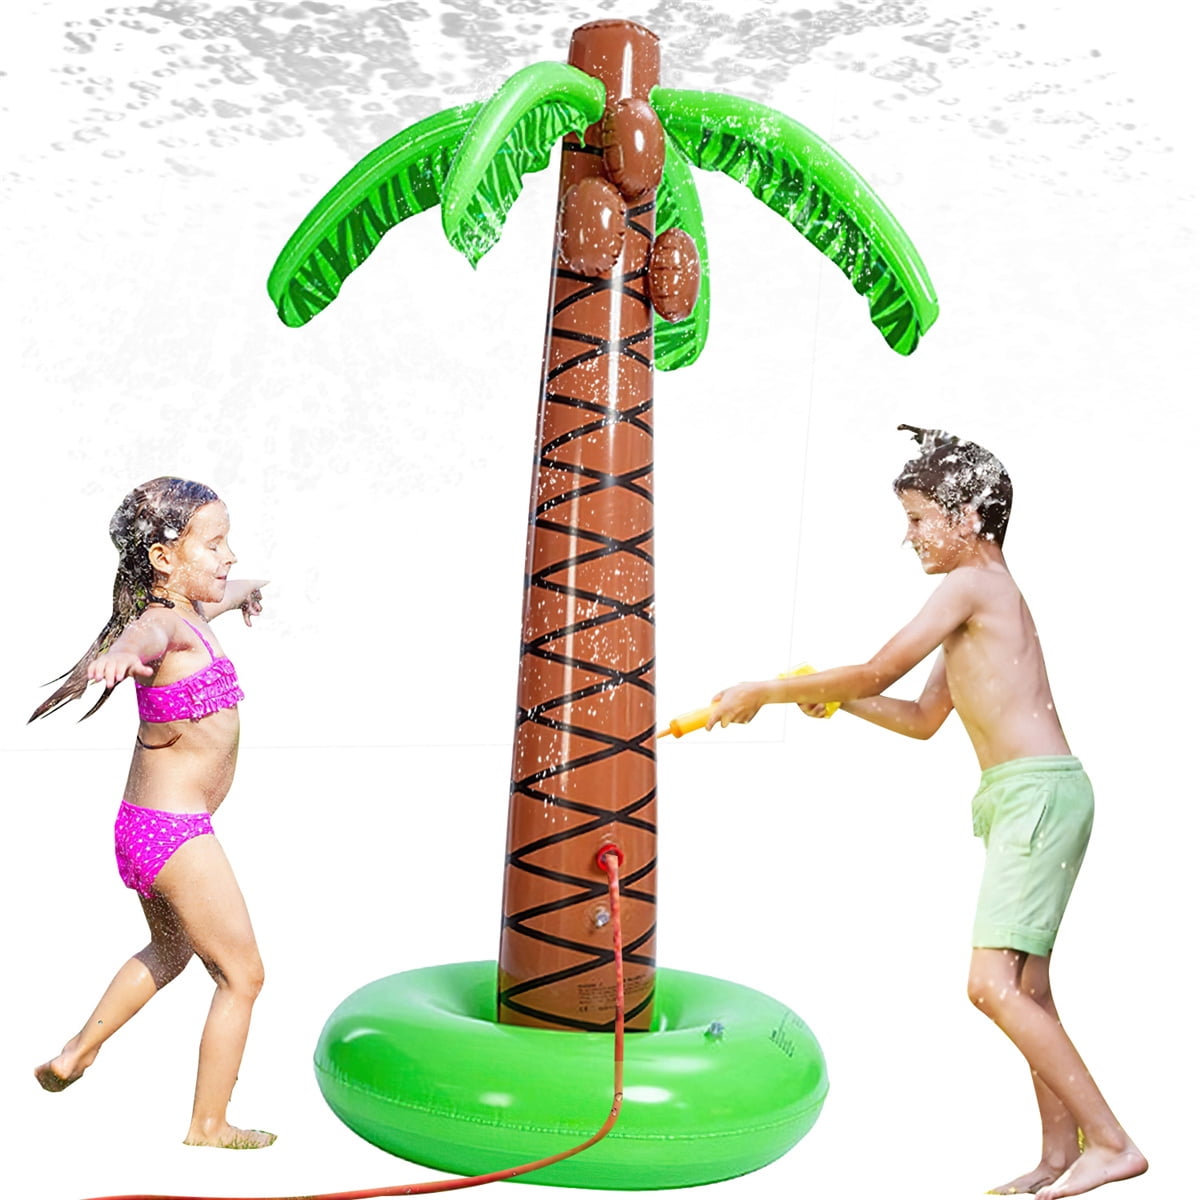 Soyoekbt Inflatable Palm Tree Yard Sprinkler Toy,Kids Spray Water Toy Outdoor Pa 